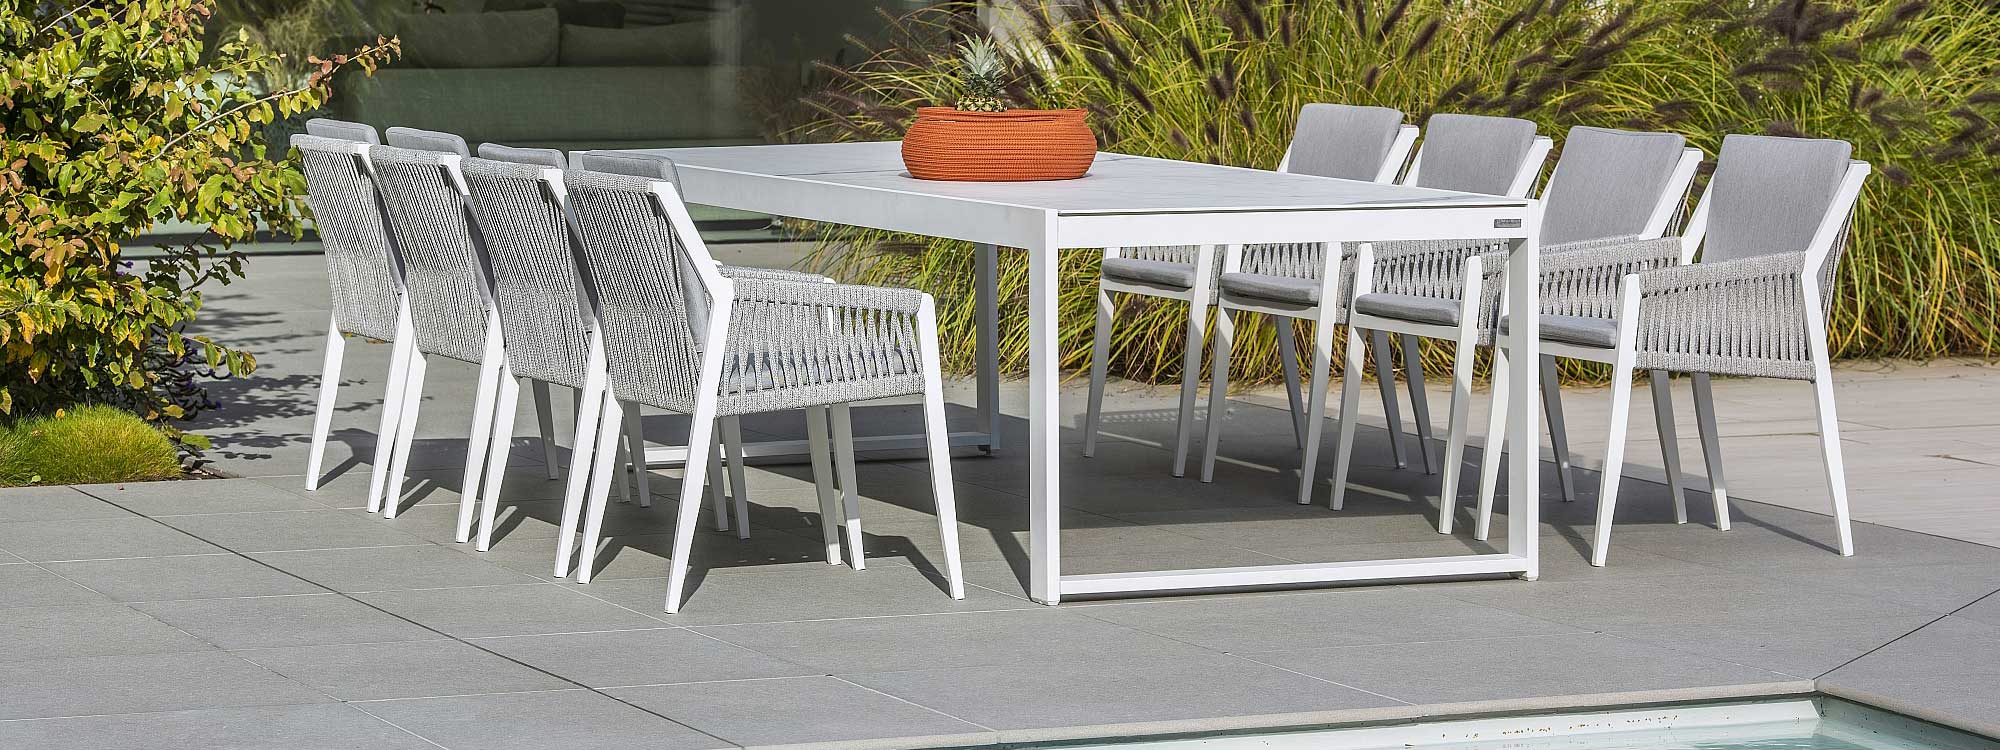 Image of 8 Ritz white garden dining chairs around Vigo XL modern rectangular garden table by Jati & Kebon